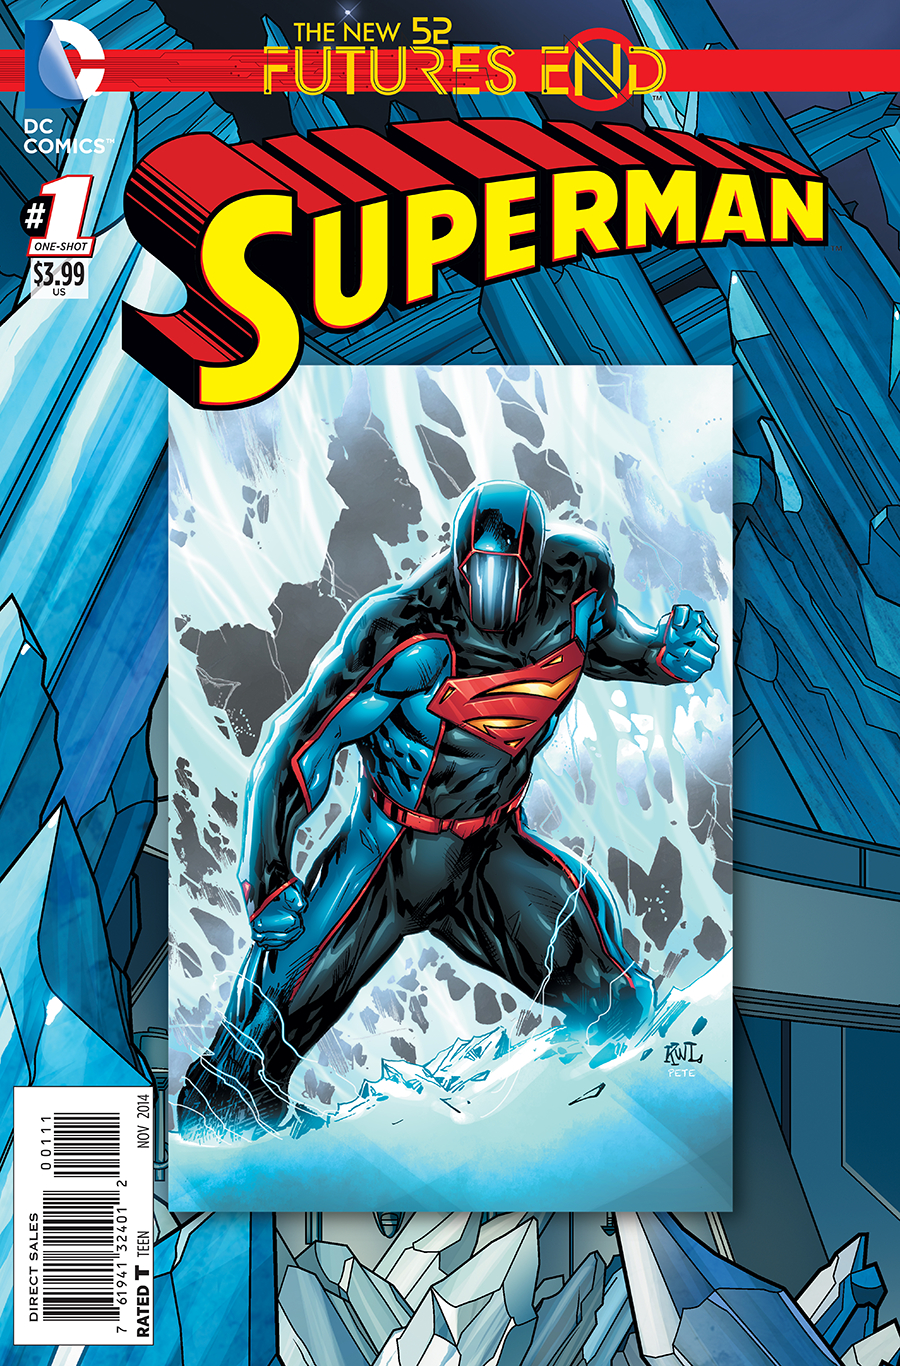 SUPERMAN FUTURES END #1